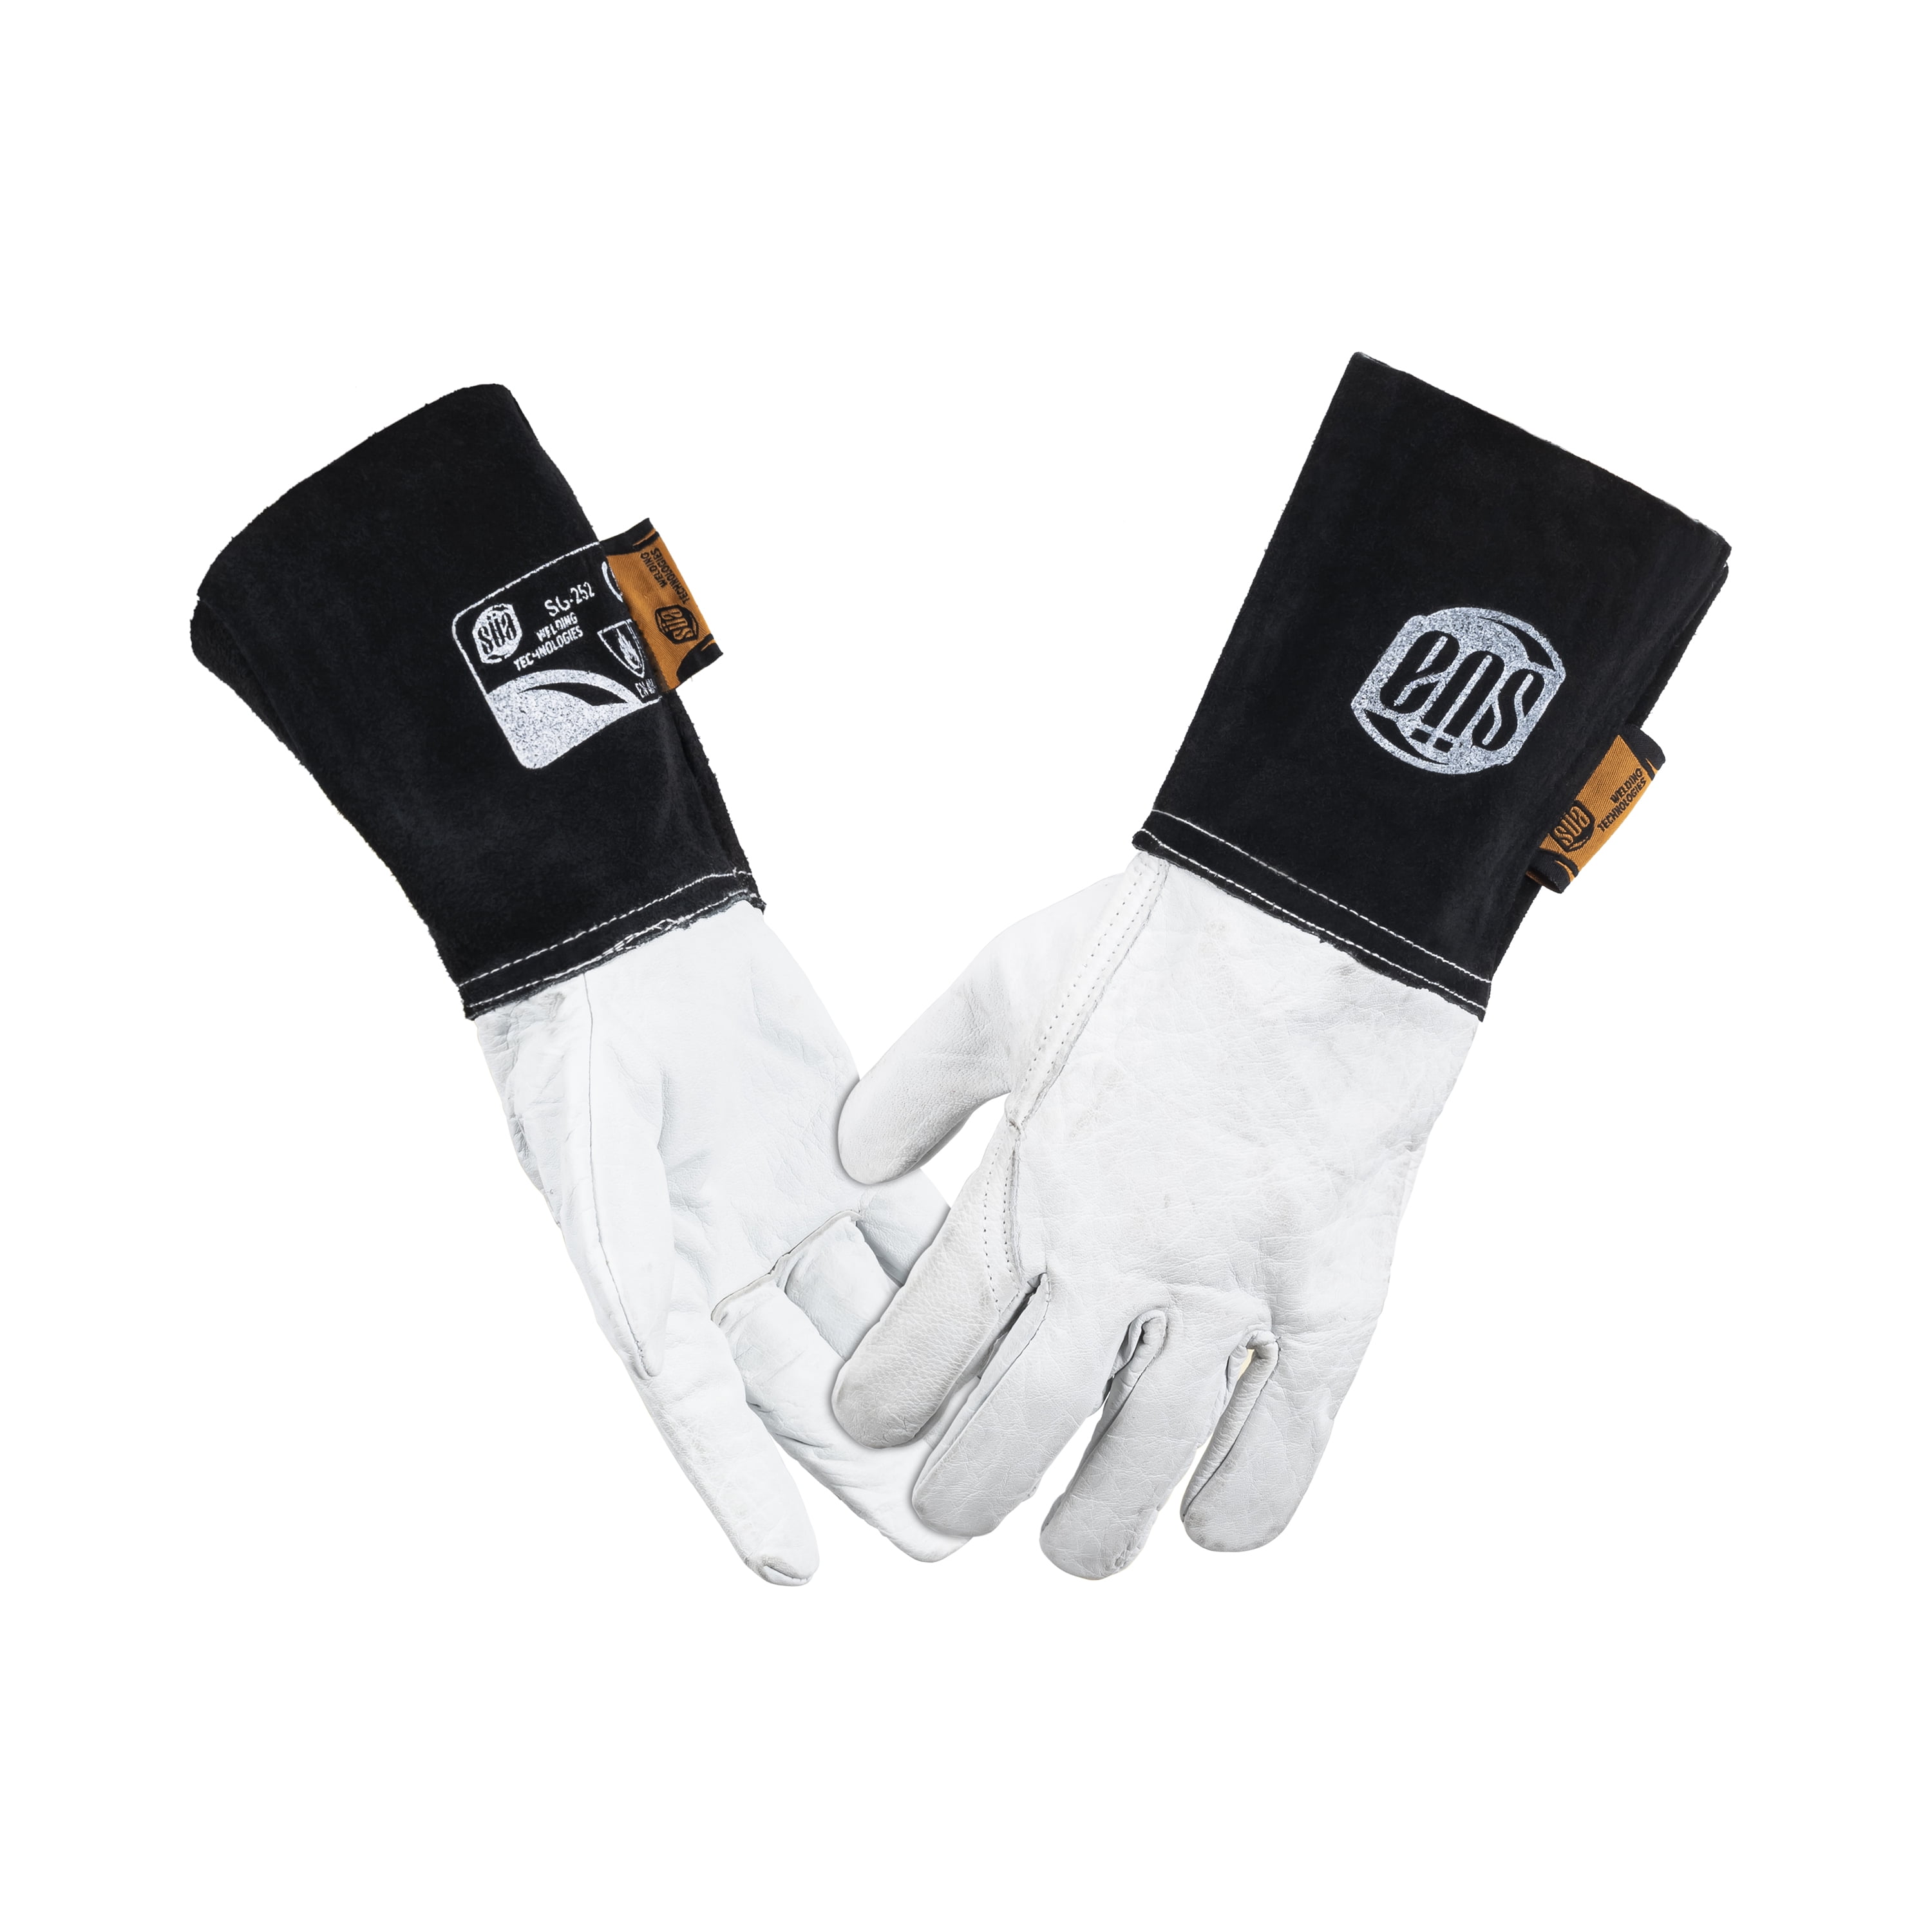 White Goat Grain Leather Palm Gloves White/Black/Gray 5 Pair X-Large 